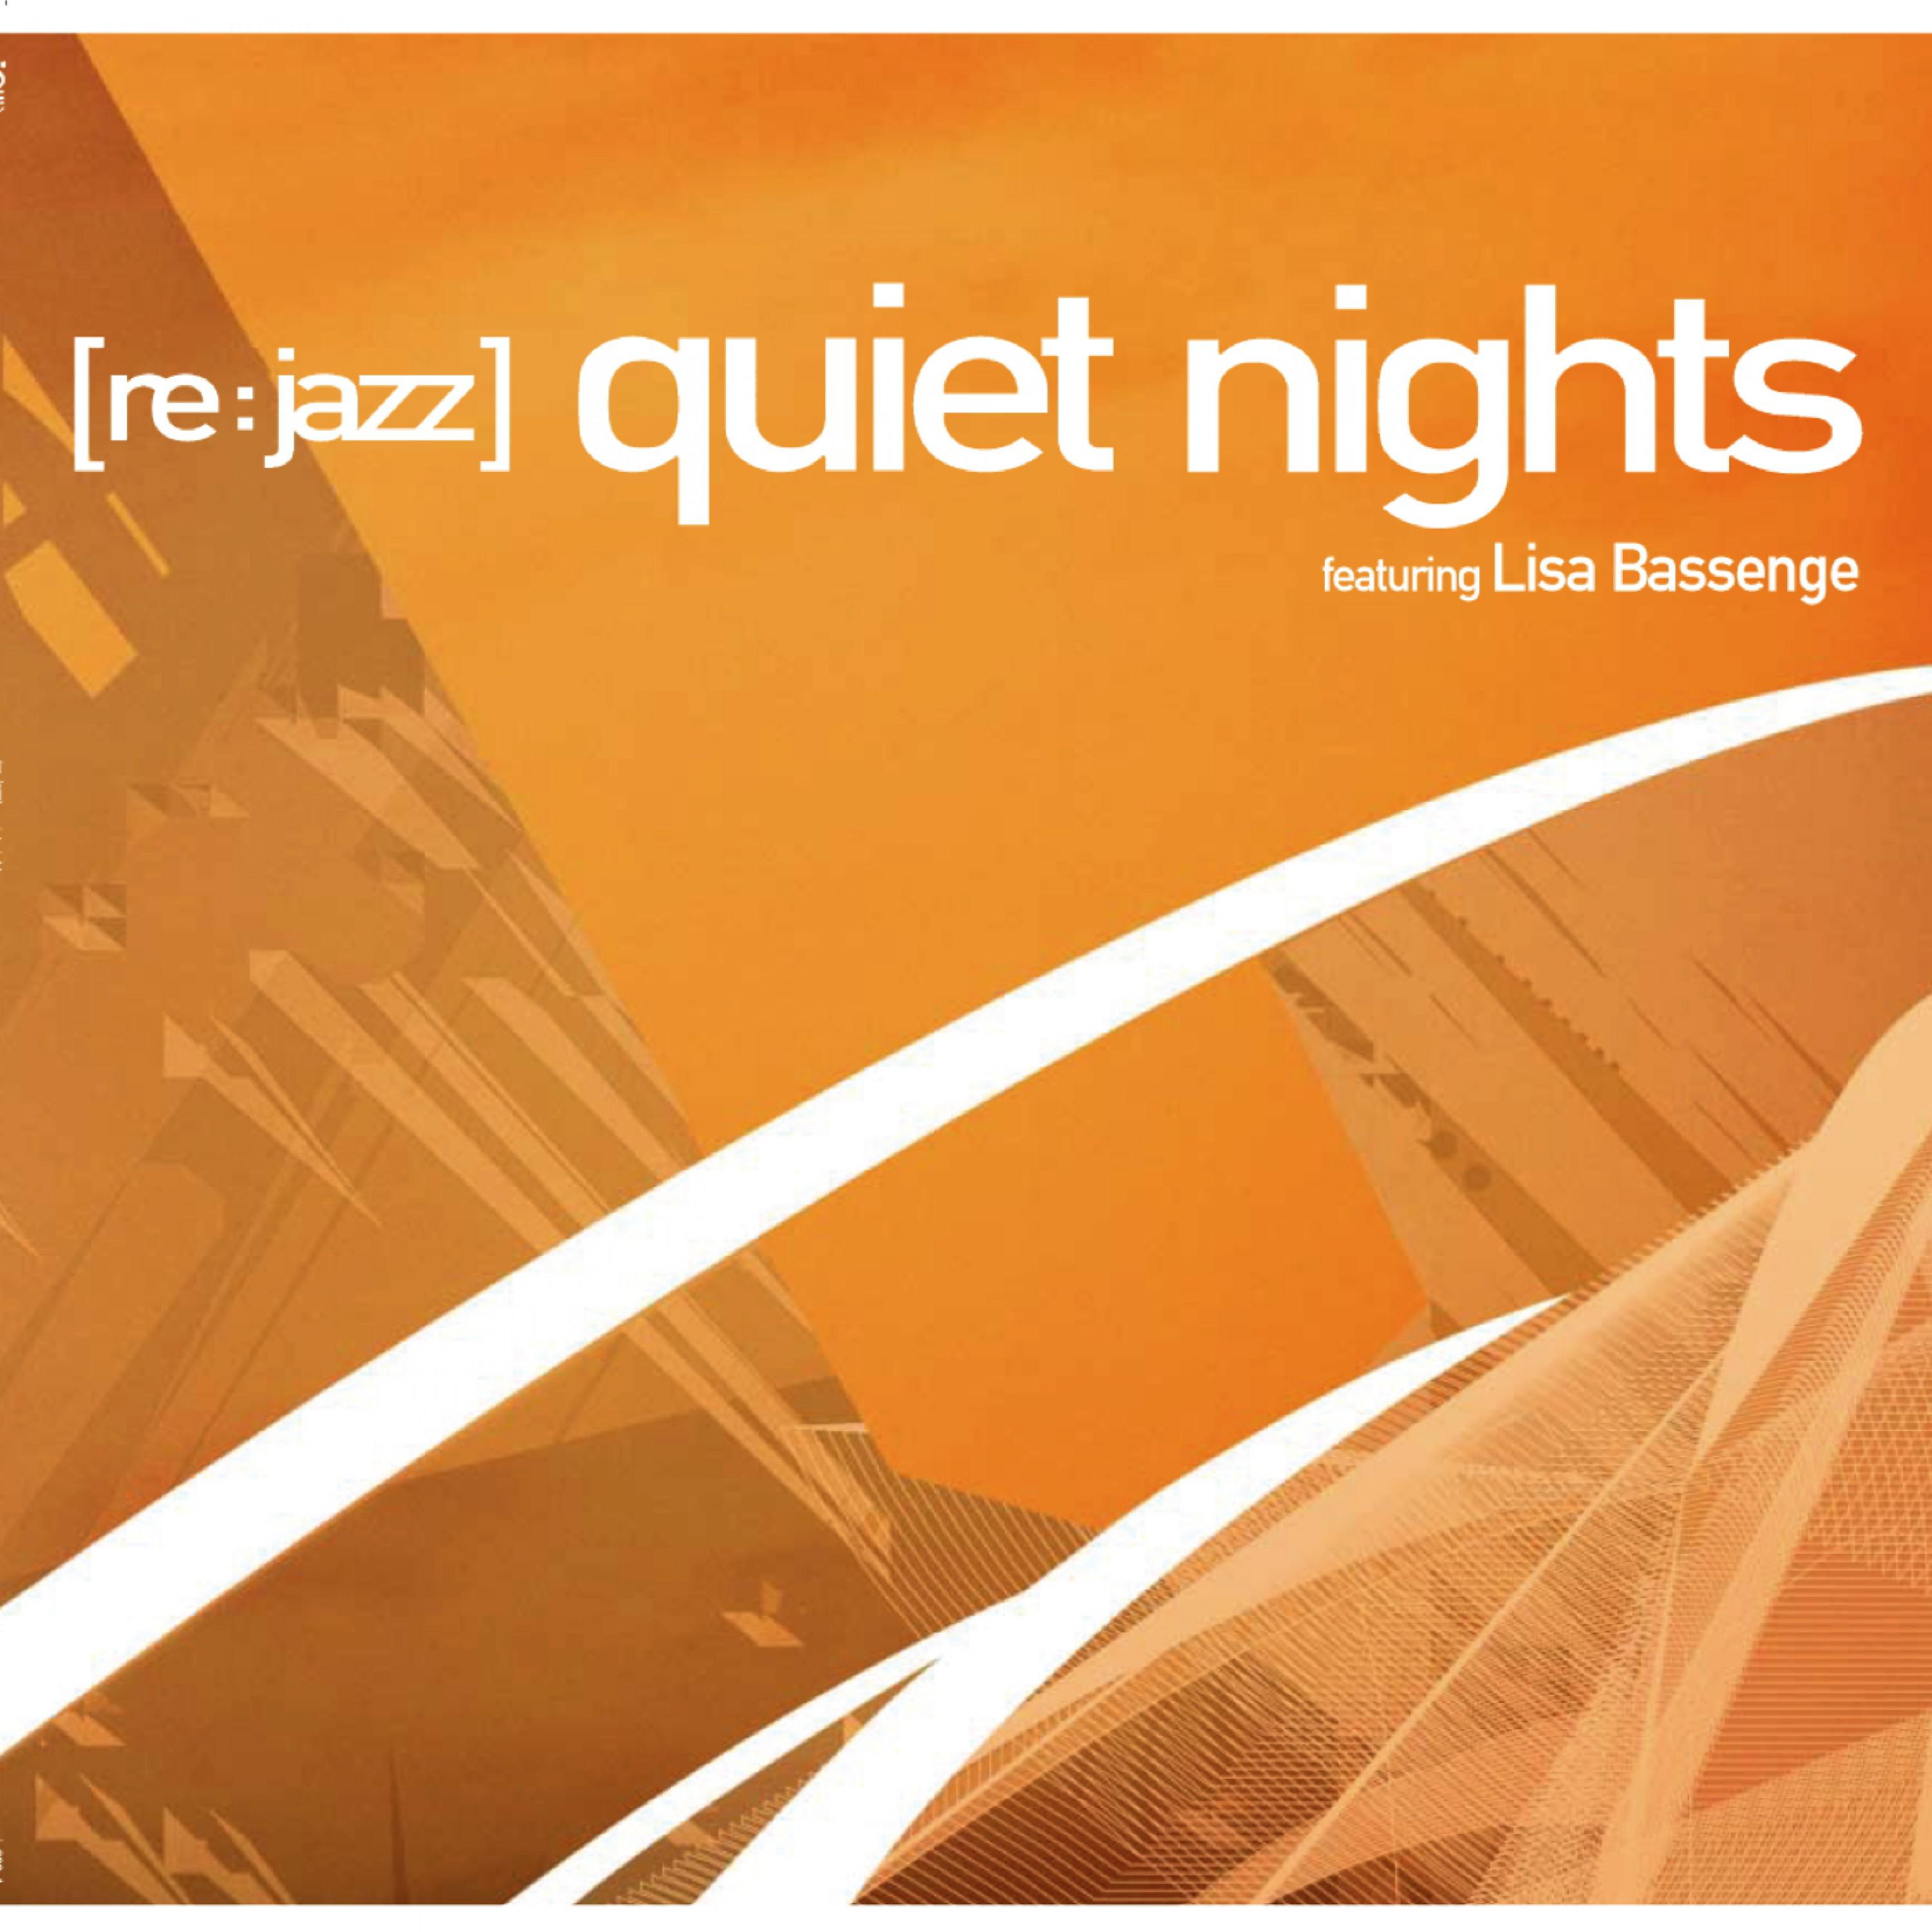 Quiet night. Jazz Lisa. Living Jazz quiet Nights 1965. Quiet Nights again.